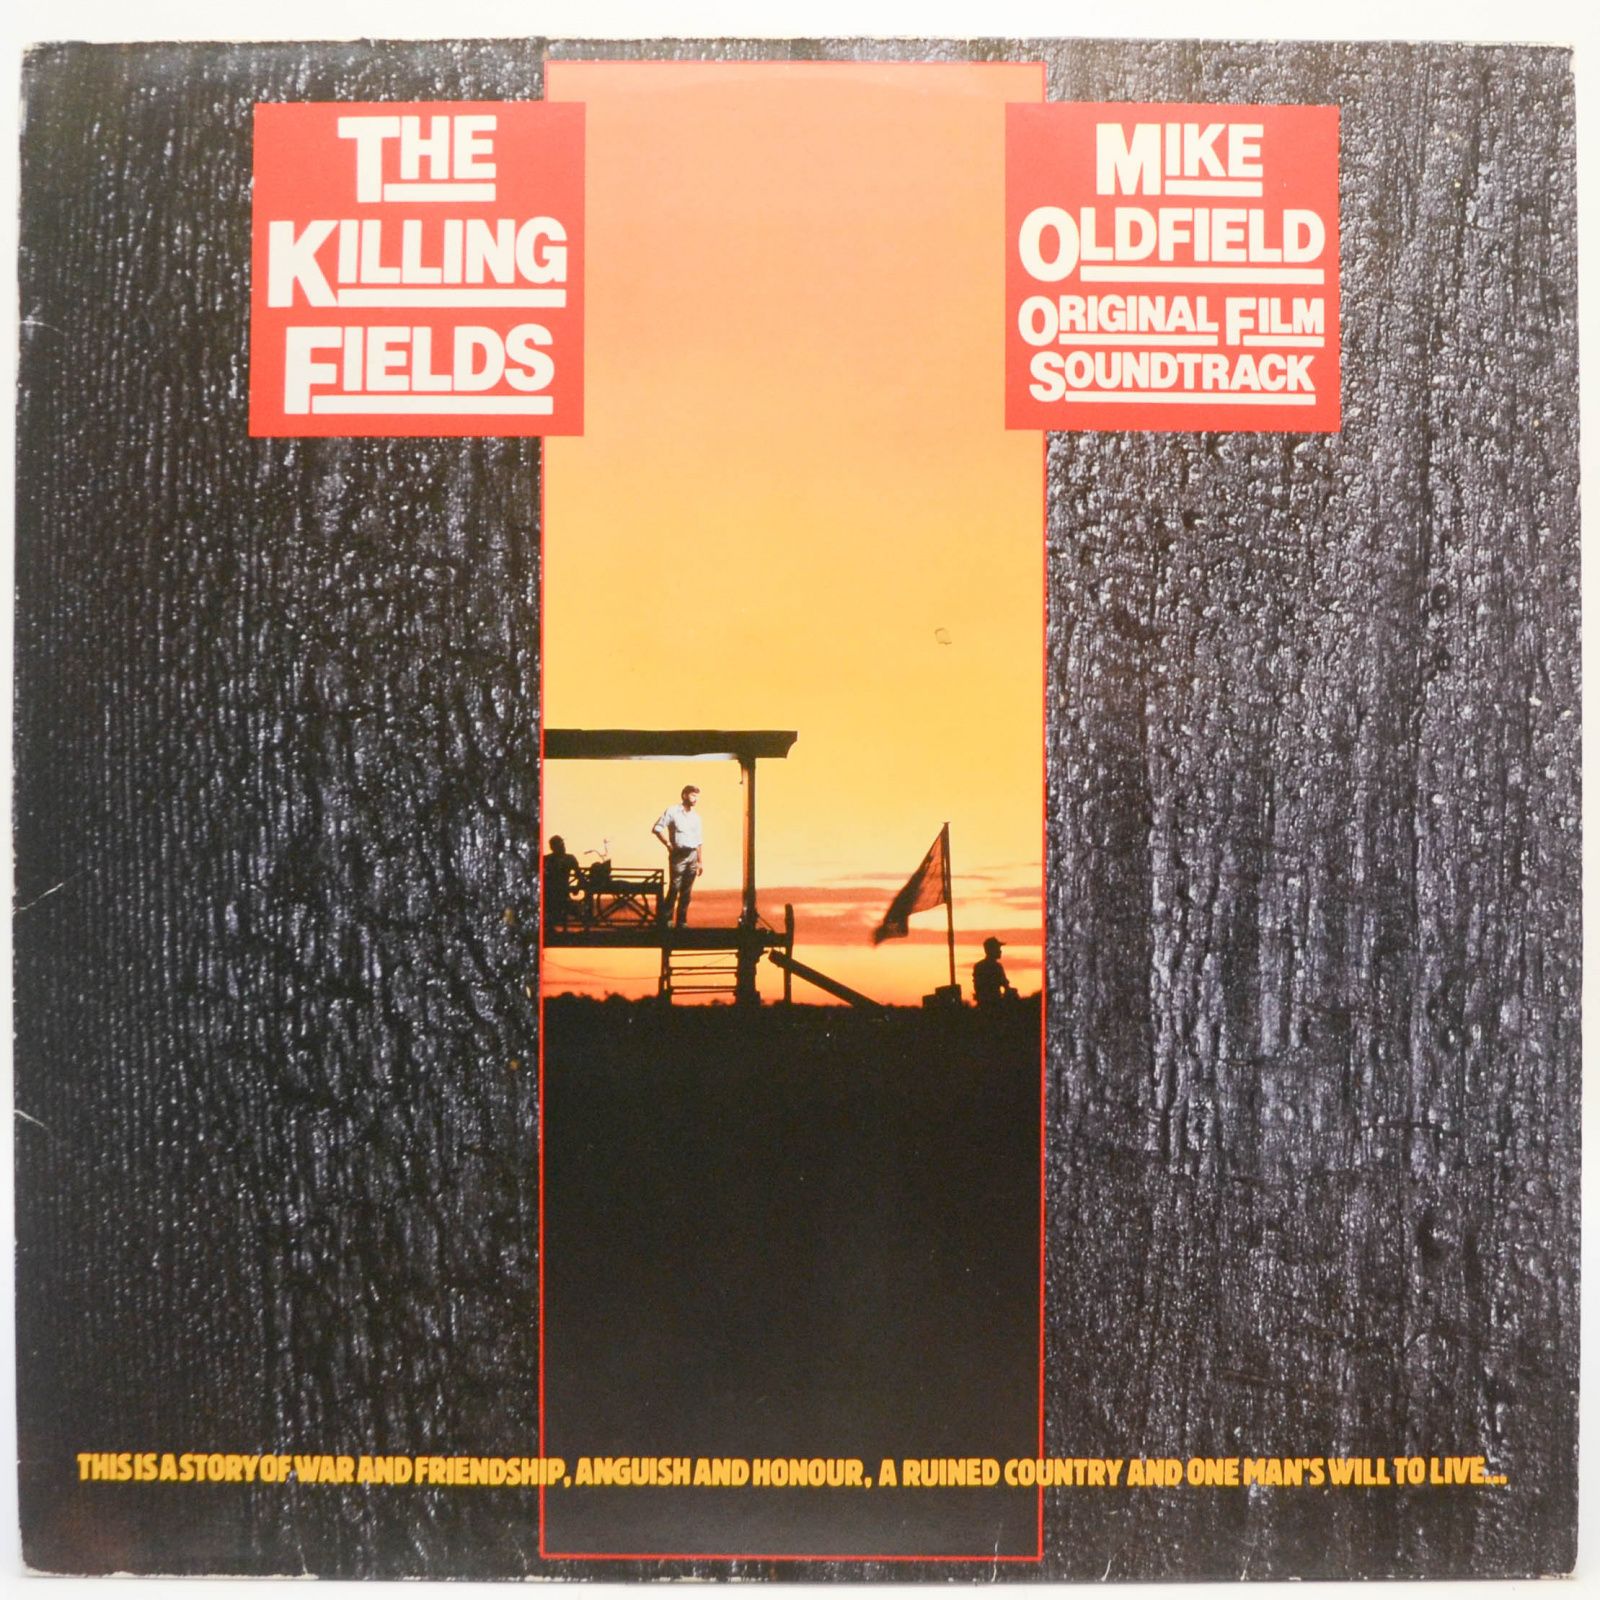 Mike Oldfield — Killing Fields — Original Film Soundtrack (2LP), 1984